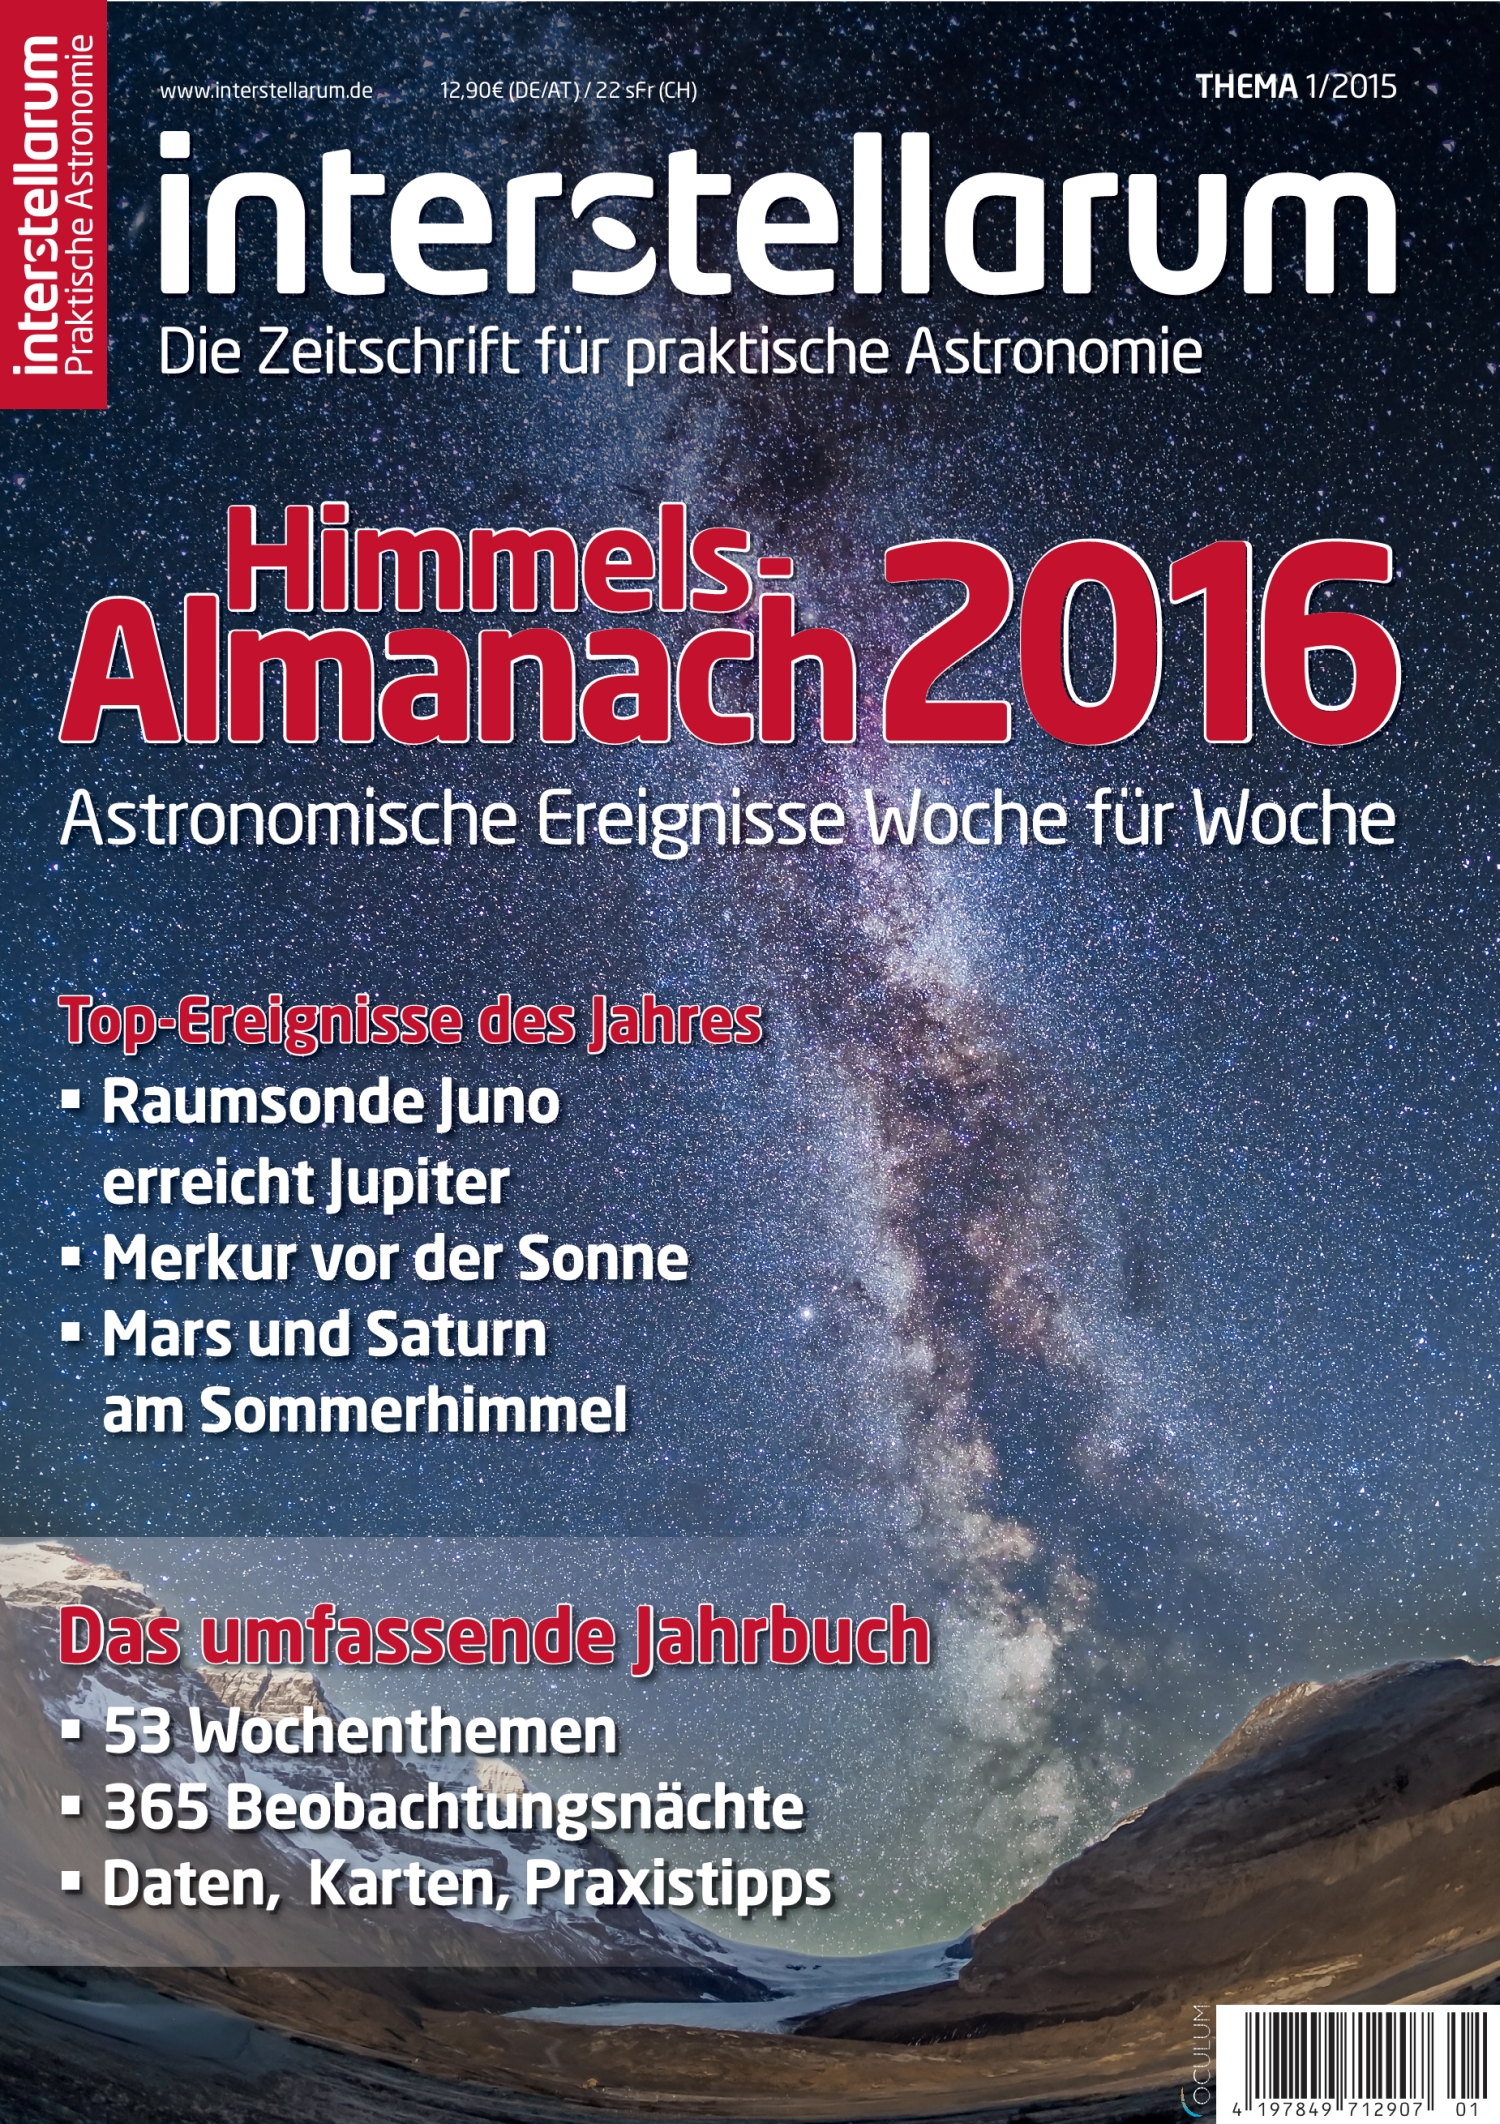 Himmels-Almanach 2016